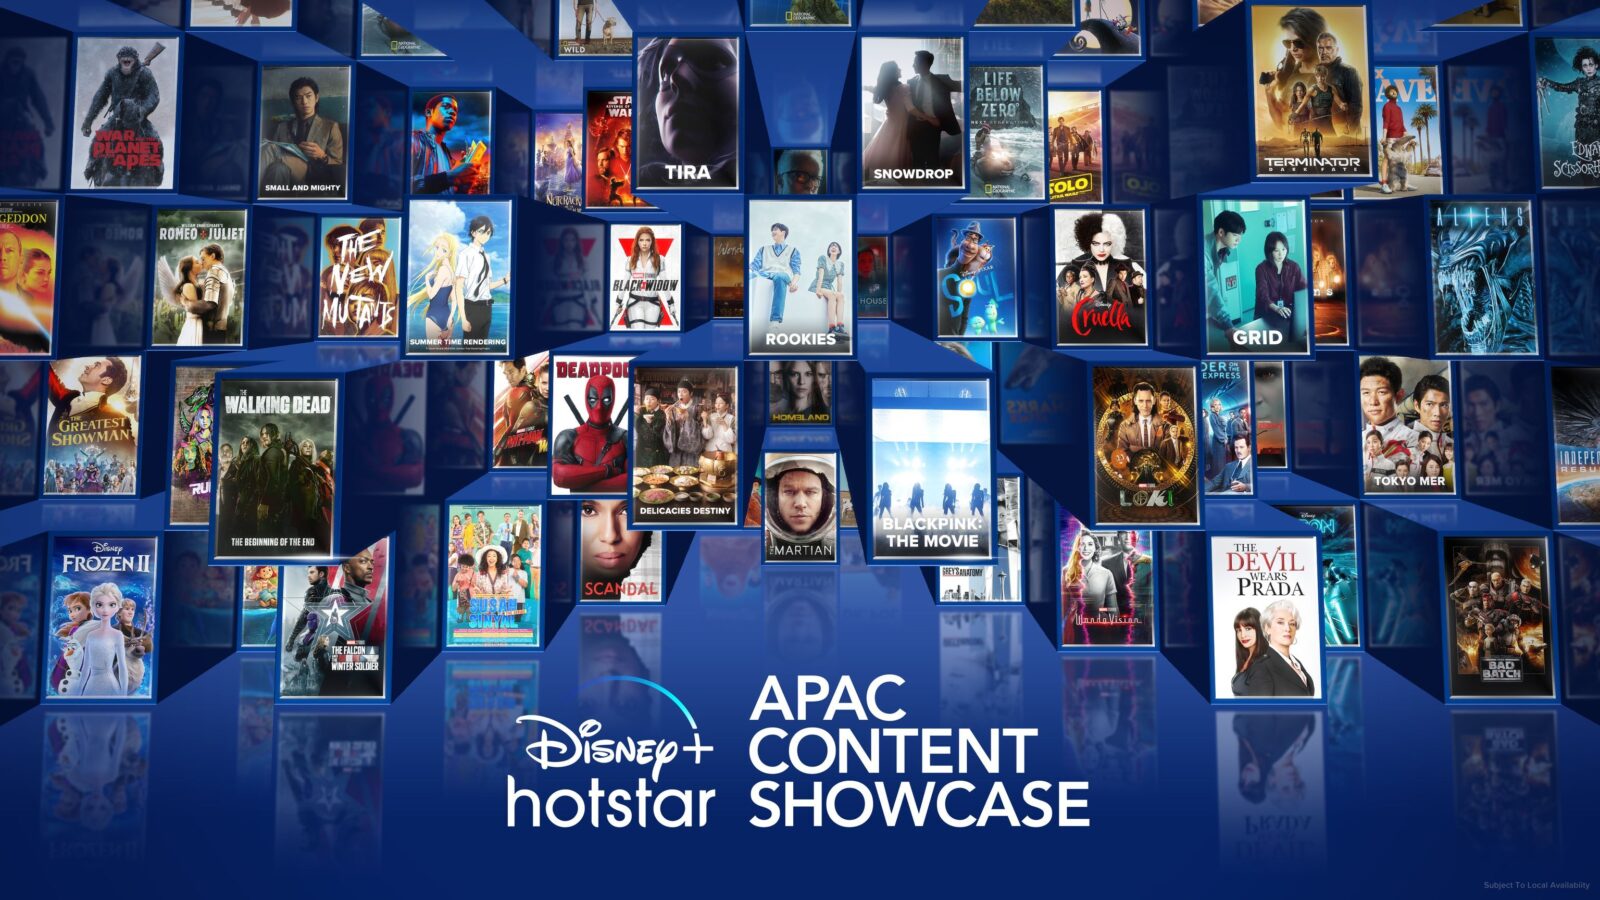 01 APAC Showcase Horizontal ASIA HOTSTAR | Disney+Hotstar | ดิสนีย์พลัส ฮอตสตาร์ เตรียมเพิ่มคอนเทนต์จากเอเชียแปซิฟิกกว่า 20 เรื่อง